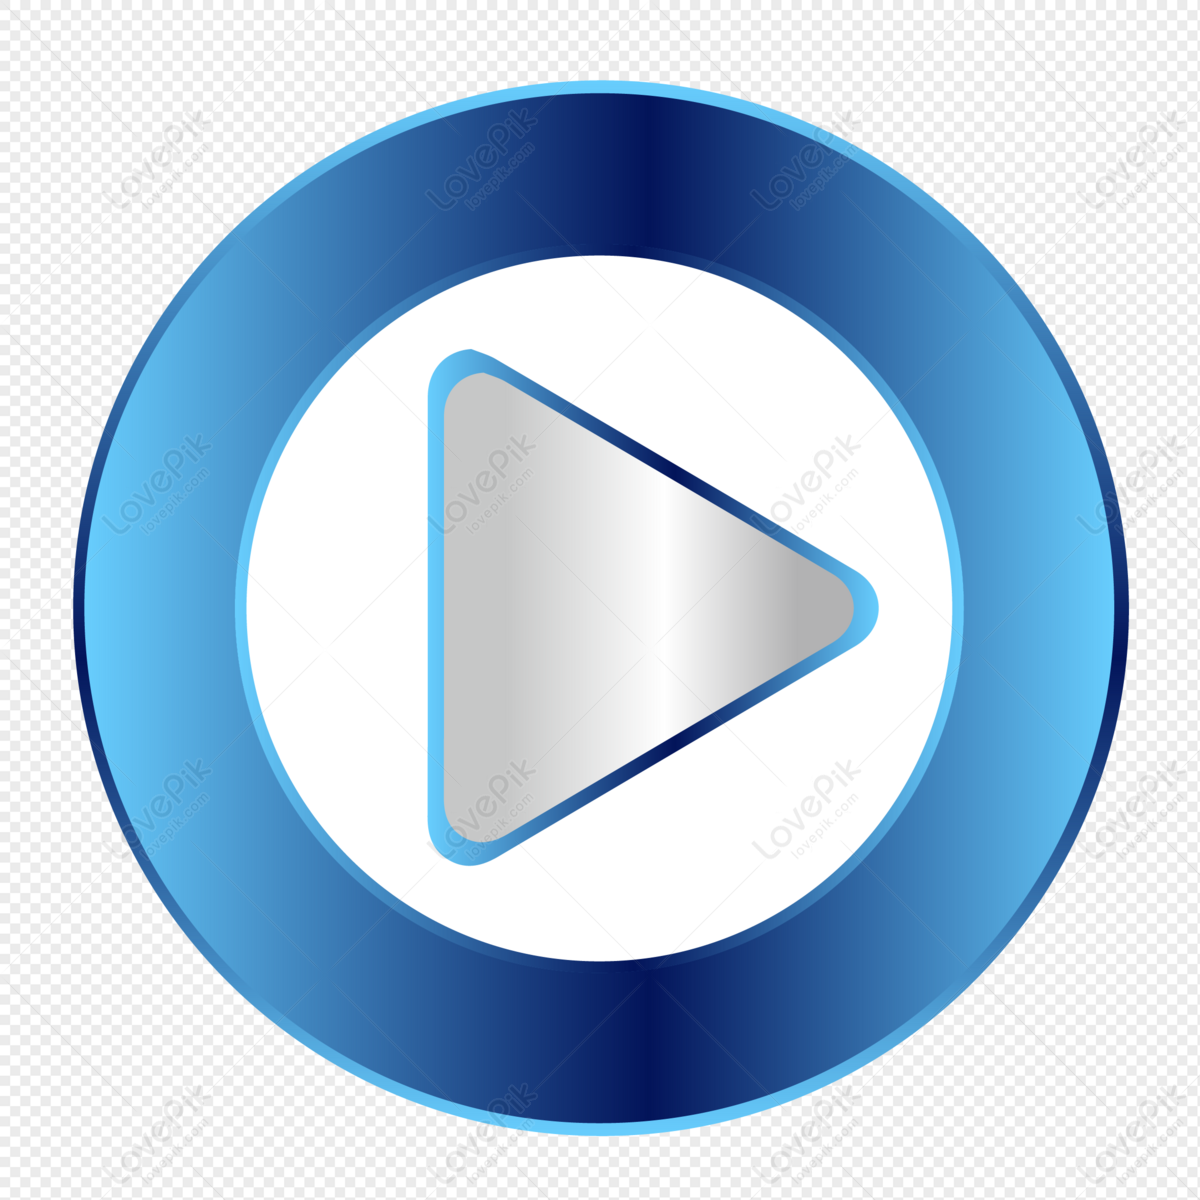 On Blue button - векторные изображения, on Blue button картинки depositphotos. Blue player